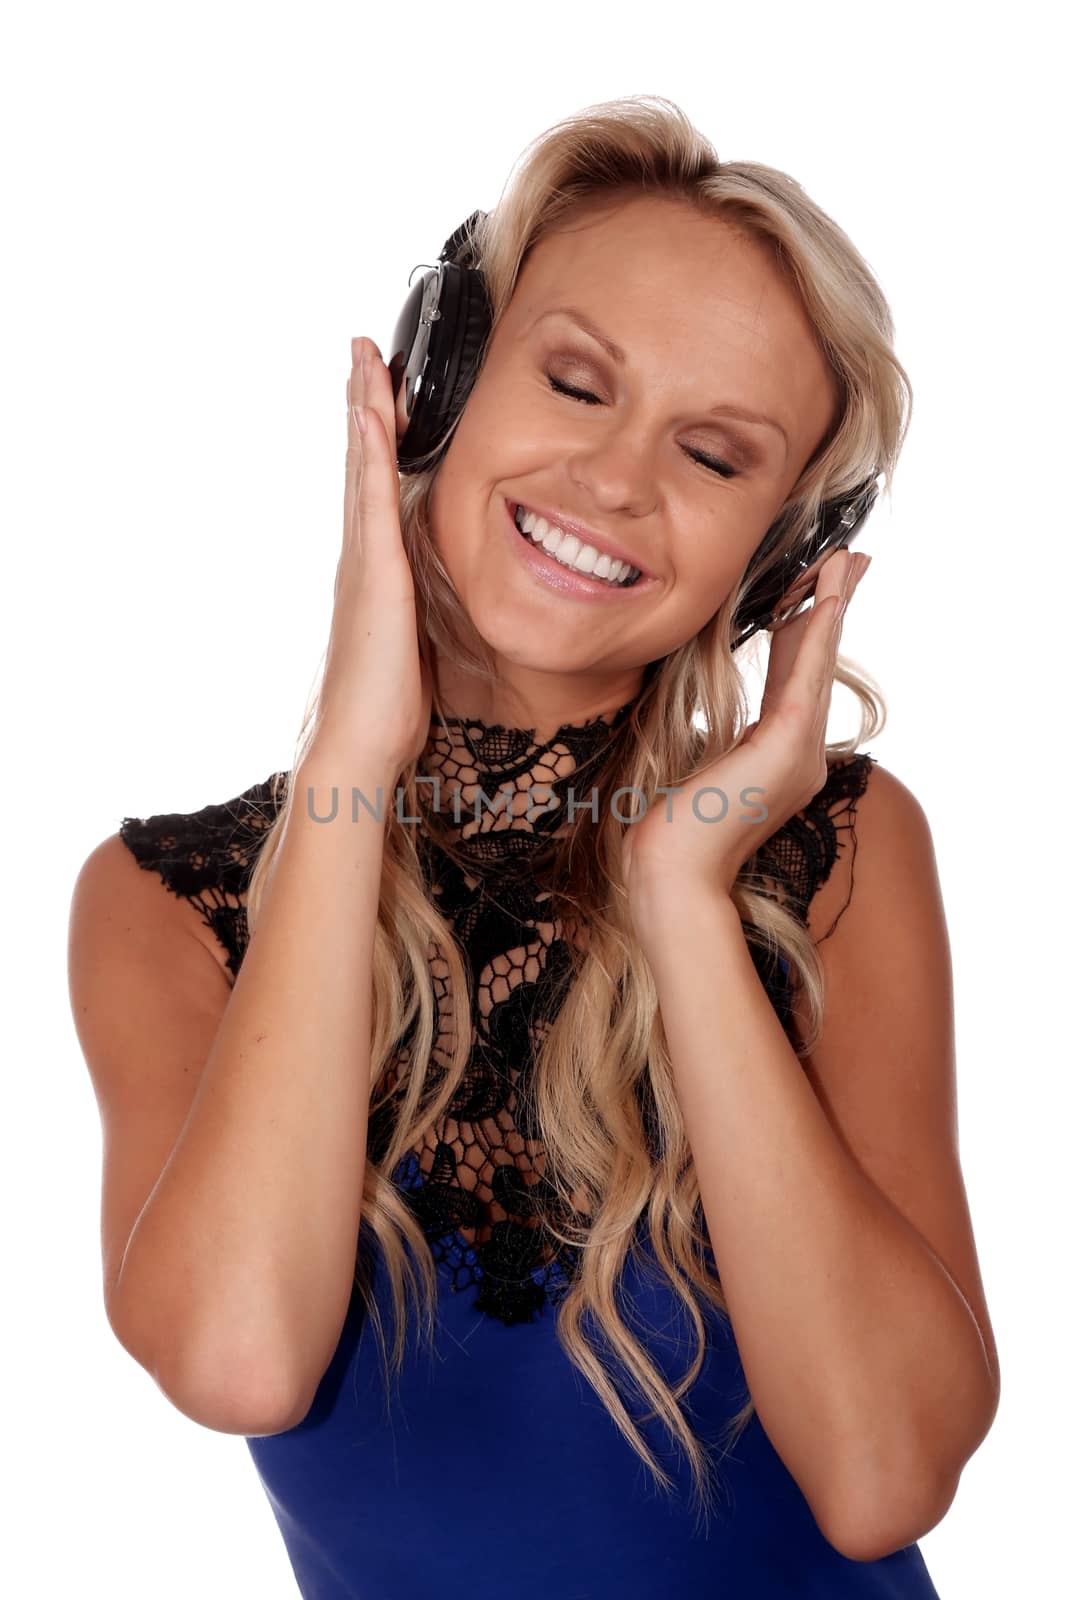 Beautiful Girl with Music Earphones by fouroaks